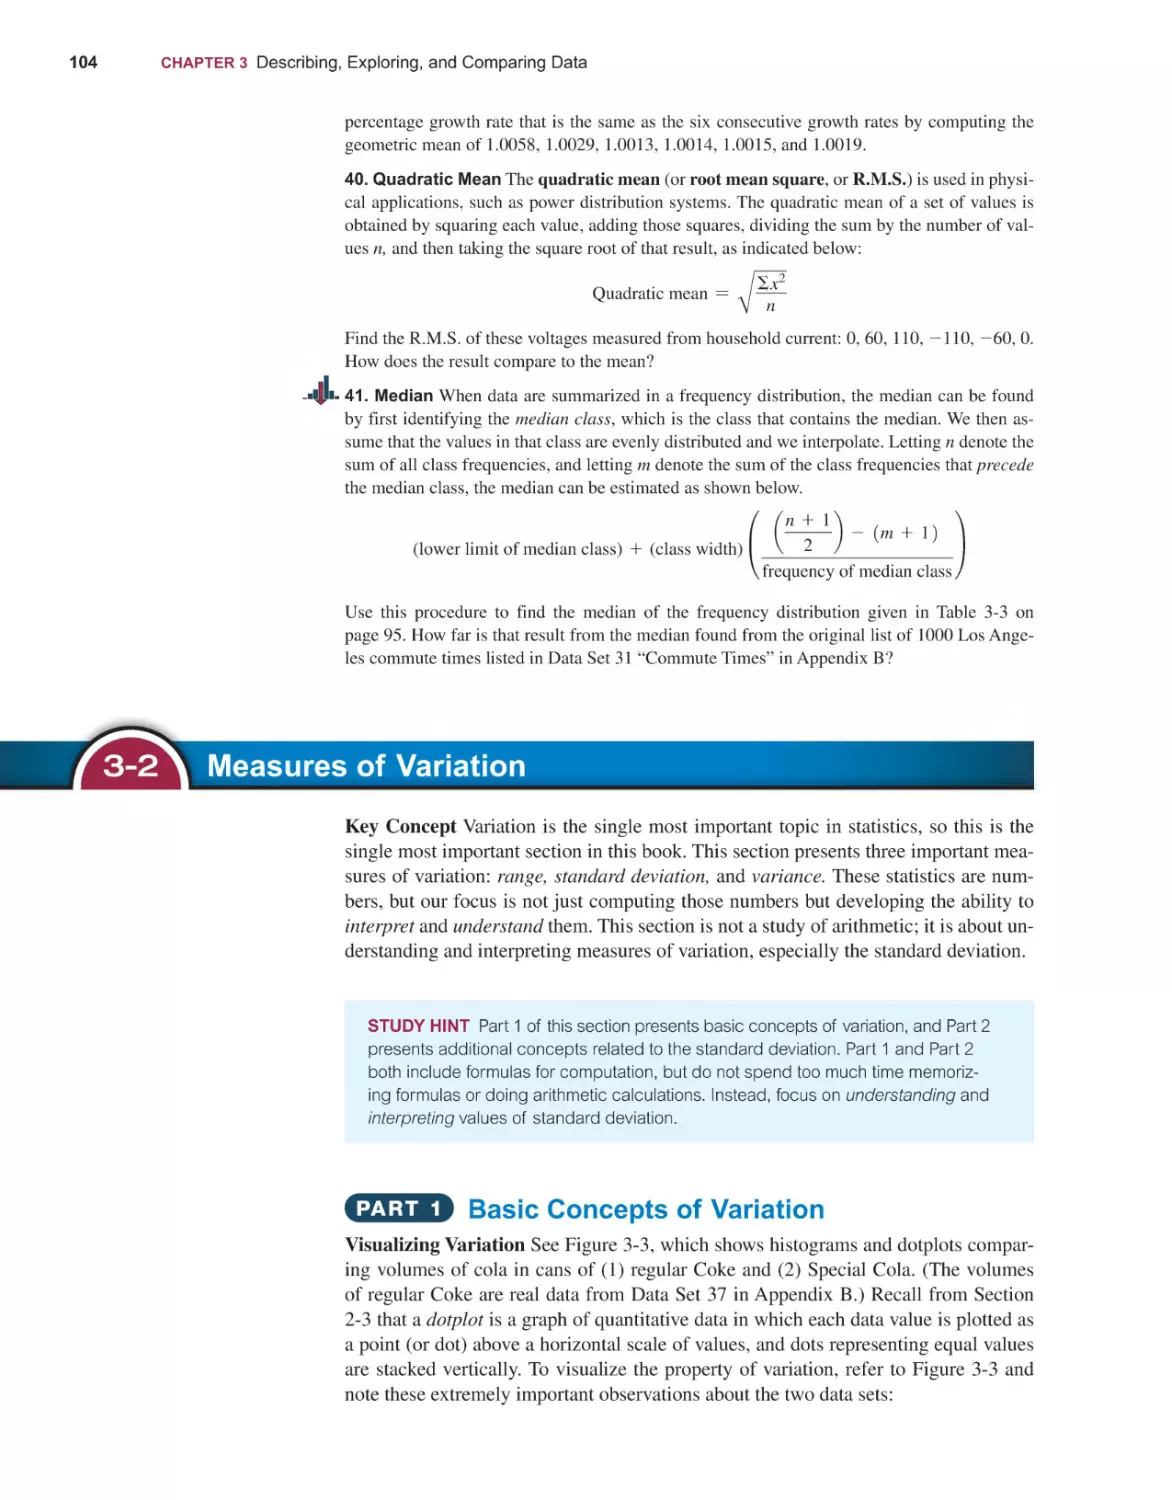 3‐2 Measures of Variation